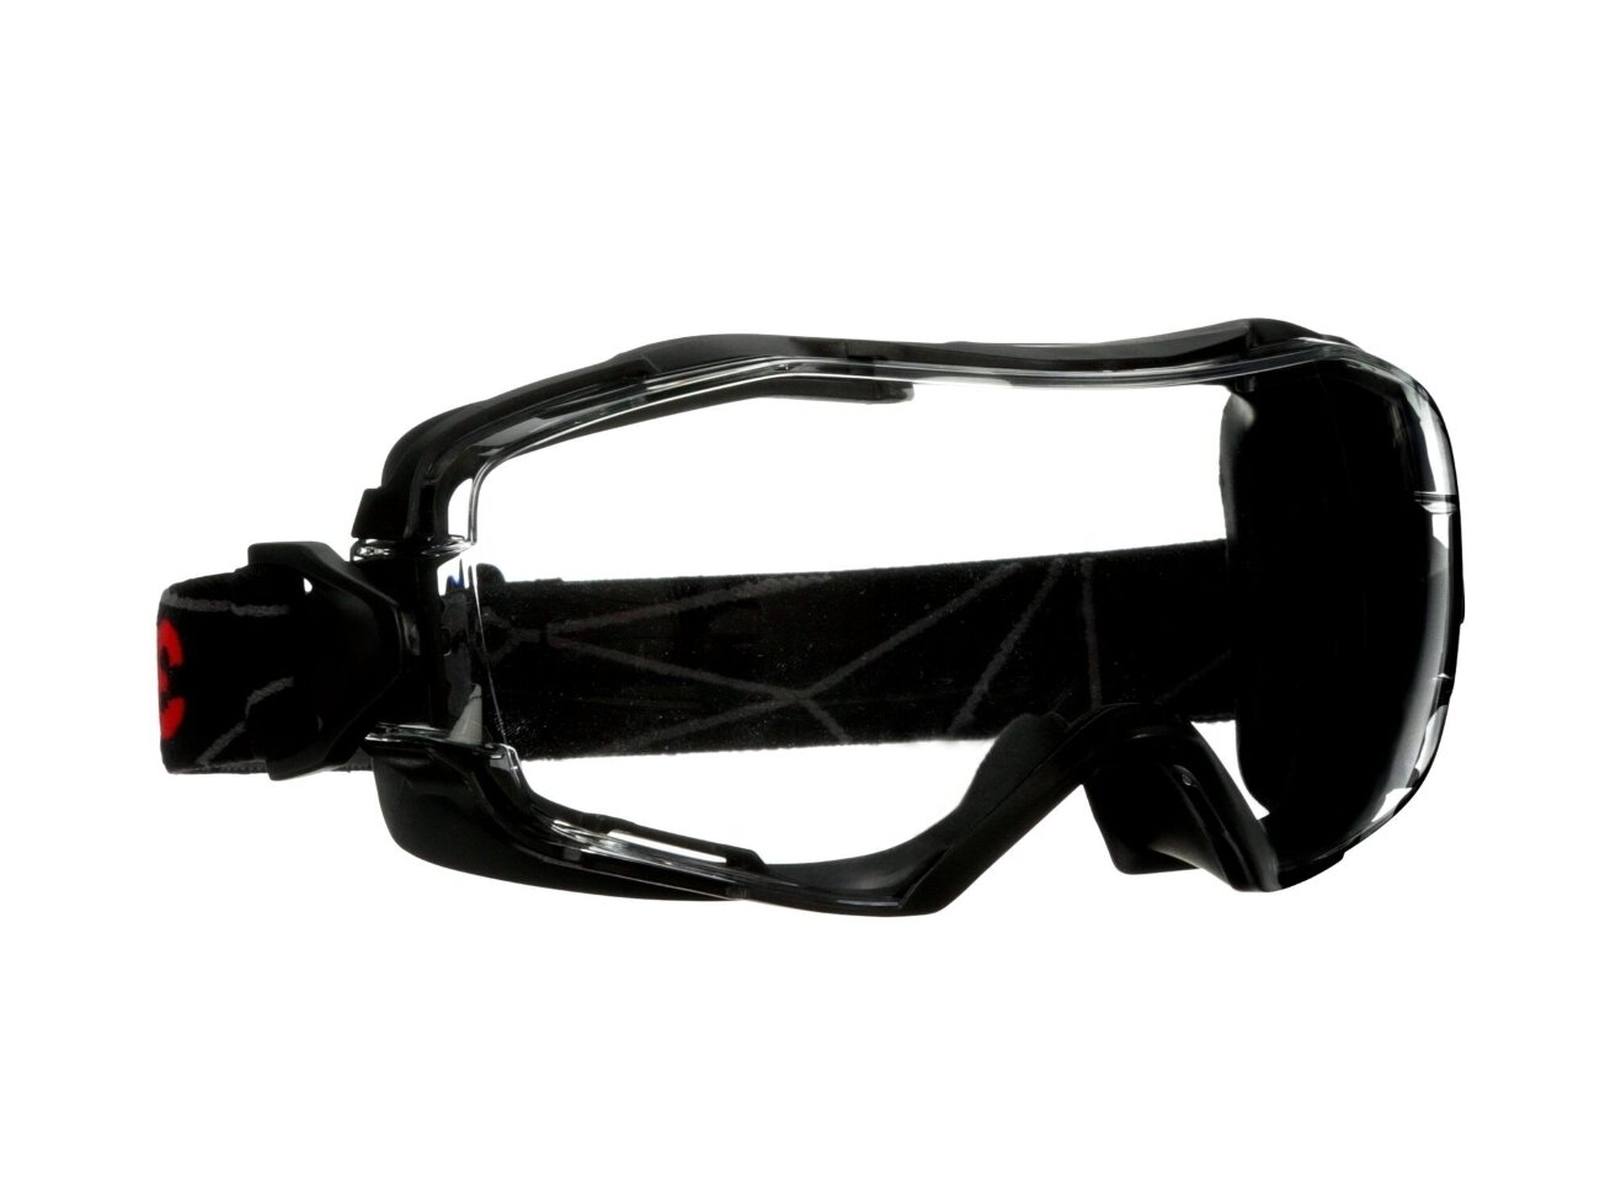 3M Gafas de visión total GoggleGear 6000, montura negra, revestimiento antivaho/antirayaduras Scotchgard (K&amp;N), lente transparente, GG6001SGAF-BLK-EU